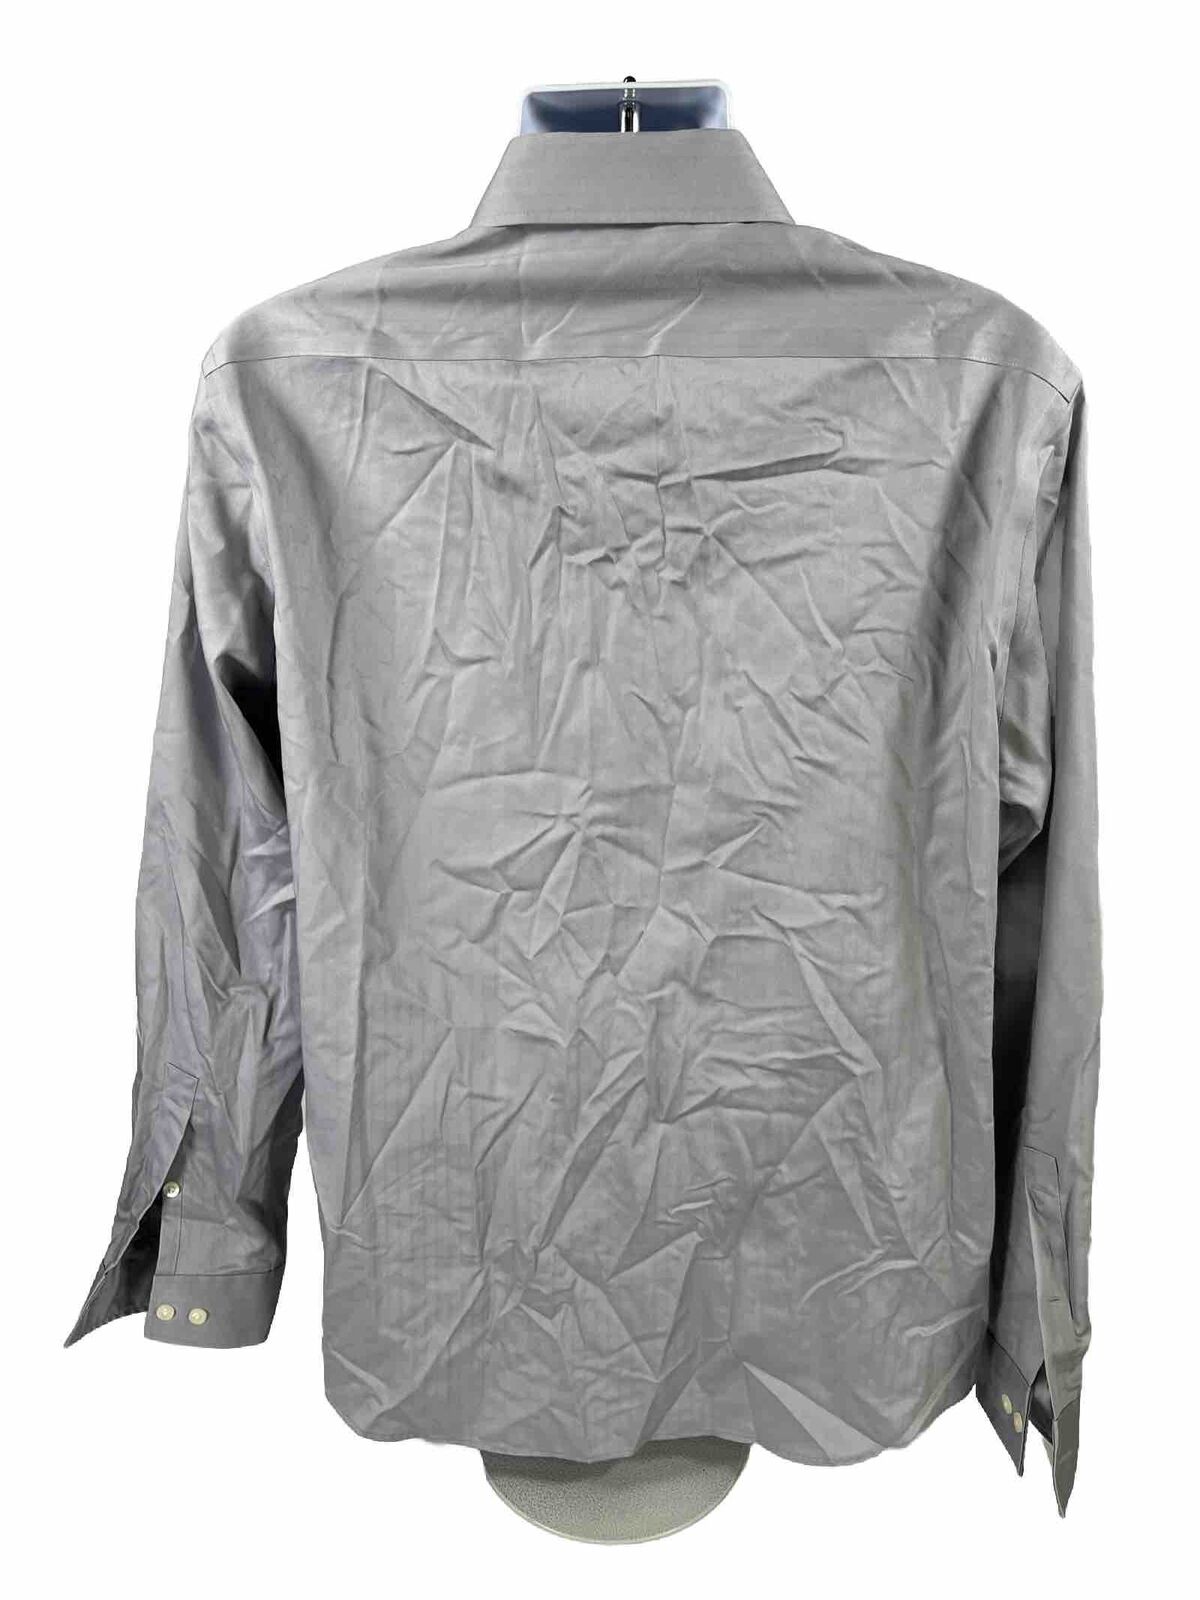 Michael Kors Men's Gray Long Sleeve Slim Fit Button Up Shirt - 34/35